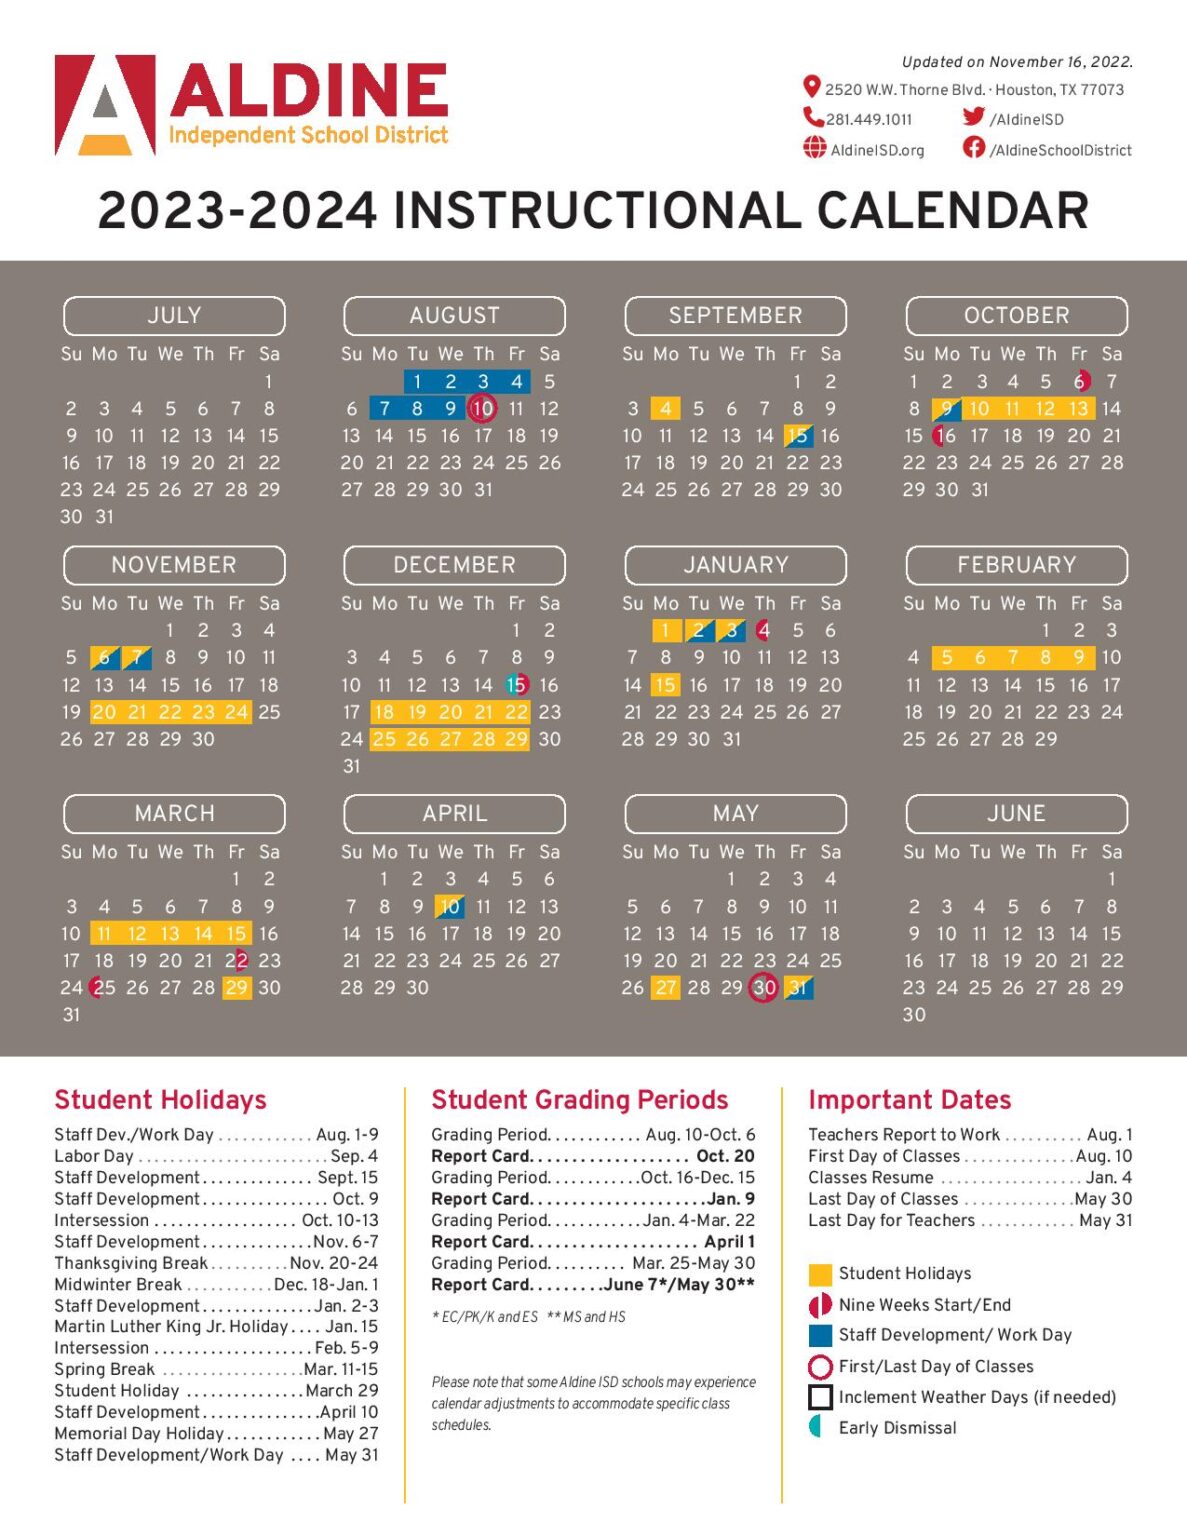 Aldine Independent School District Calendar 20232024 in PDF